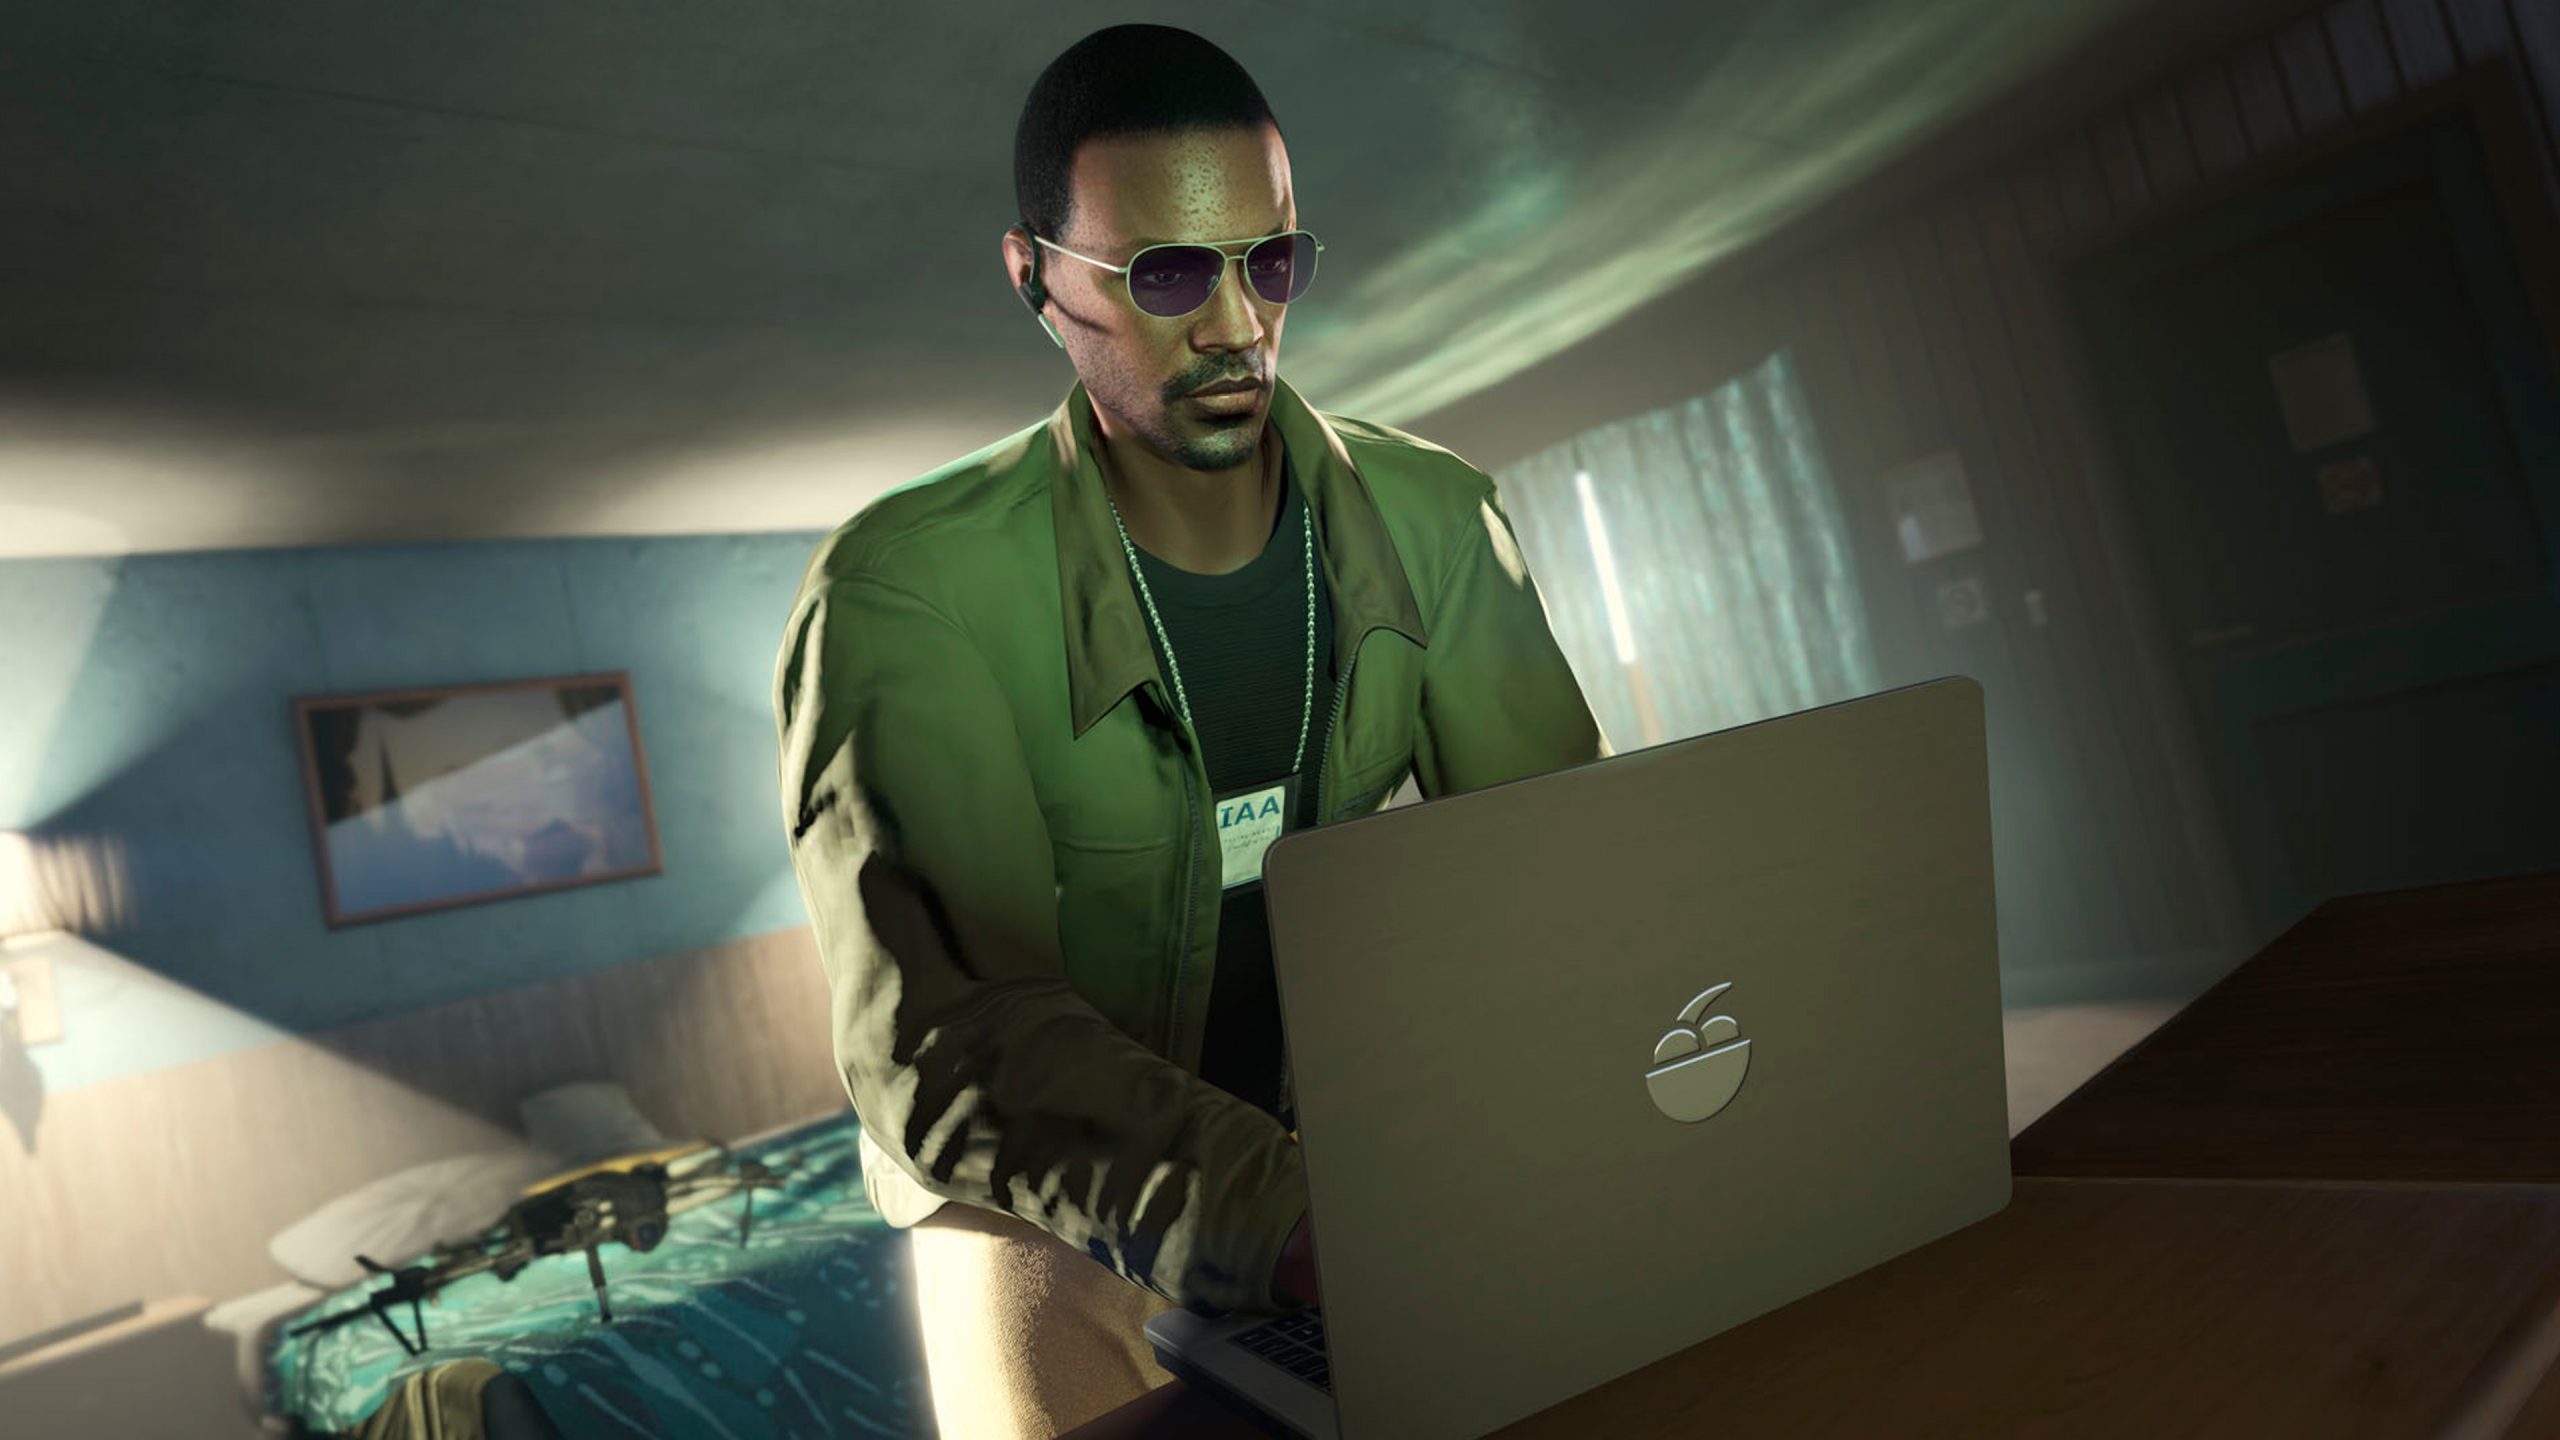 90 Videos of GTA 6 leaked online, Source code also leaked - RockstarINTEL